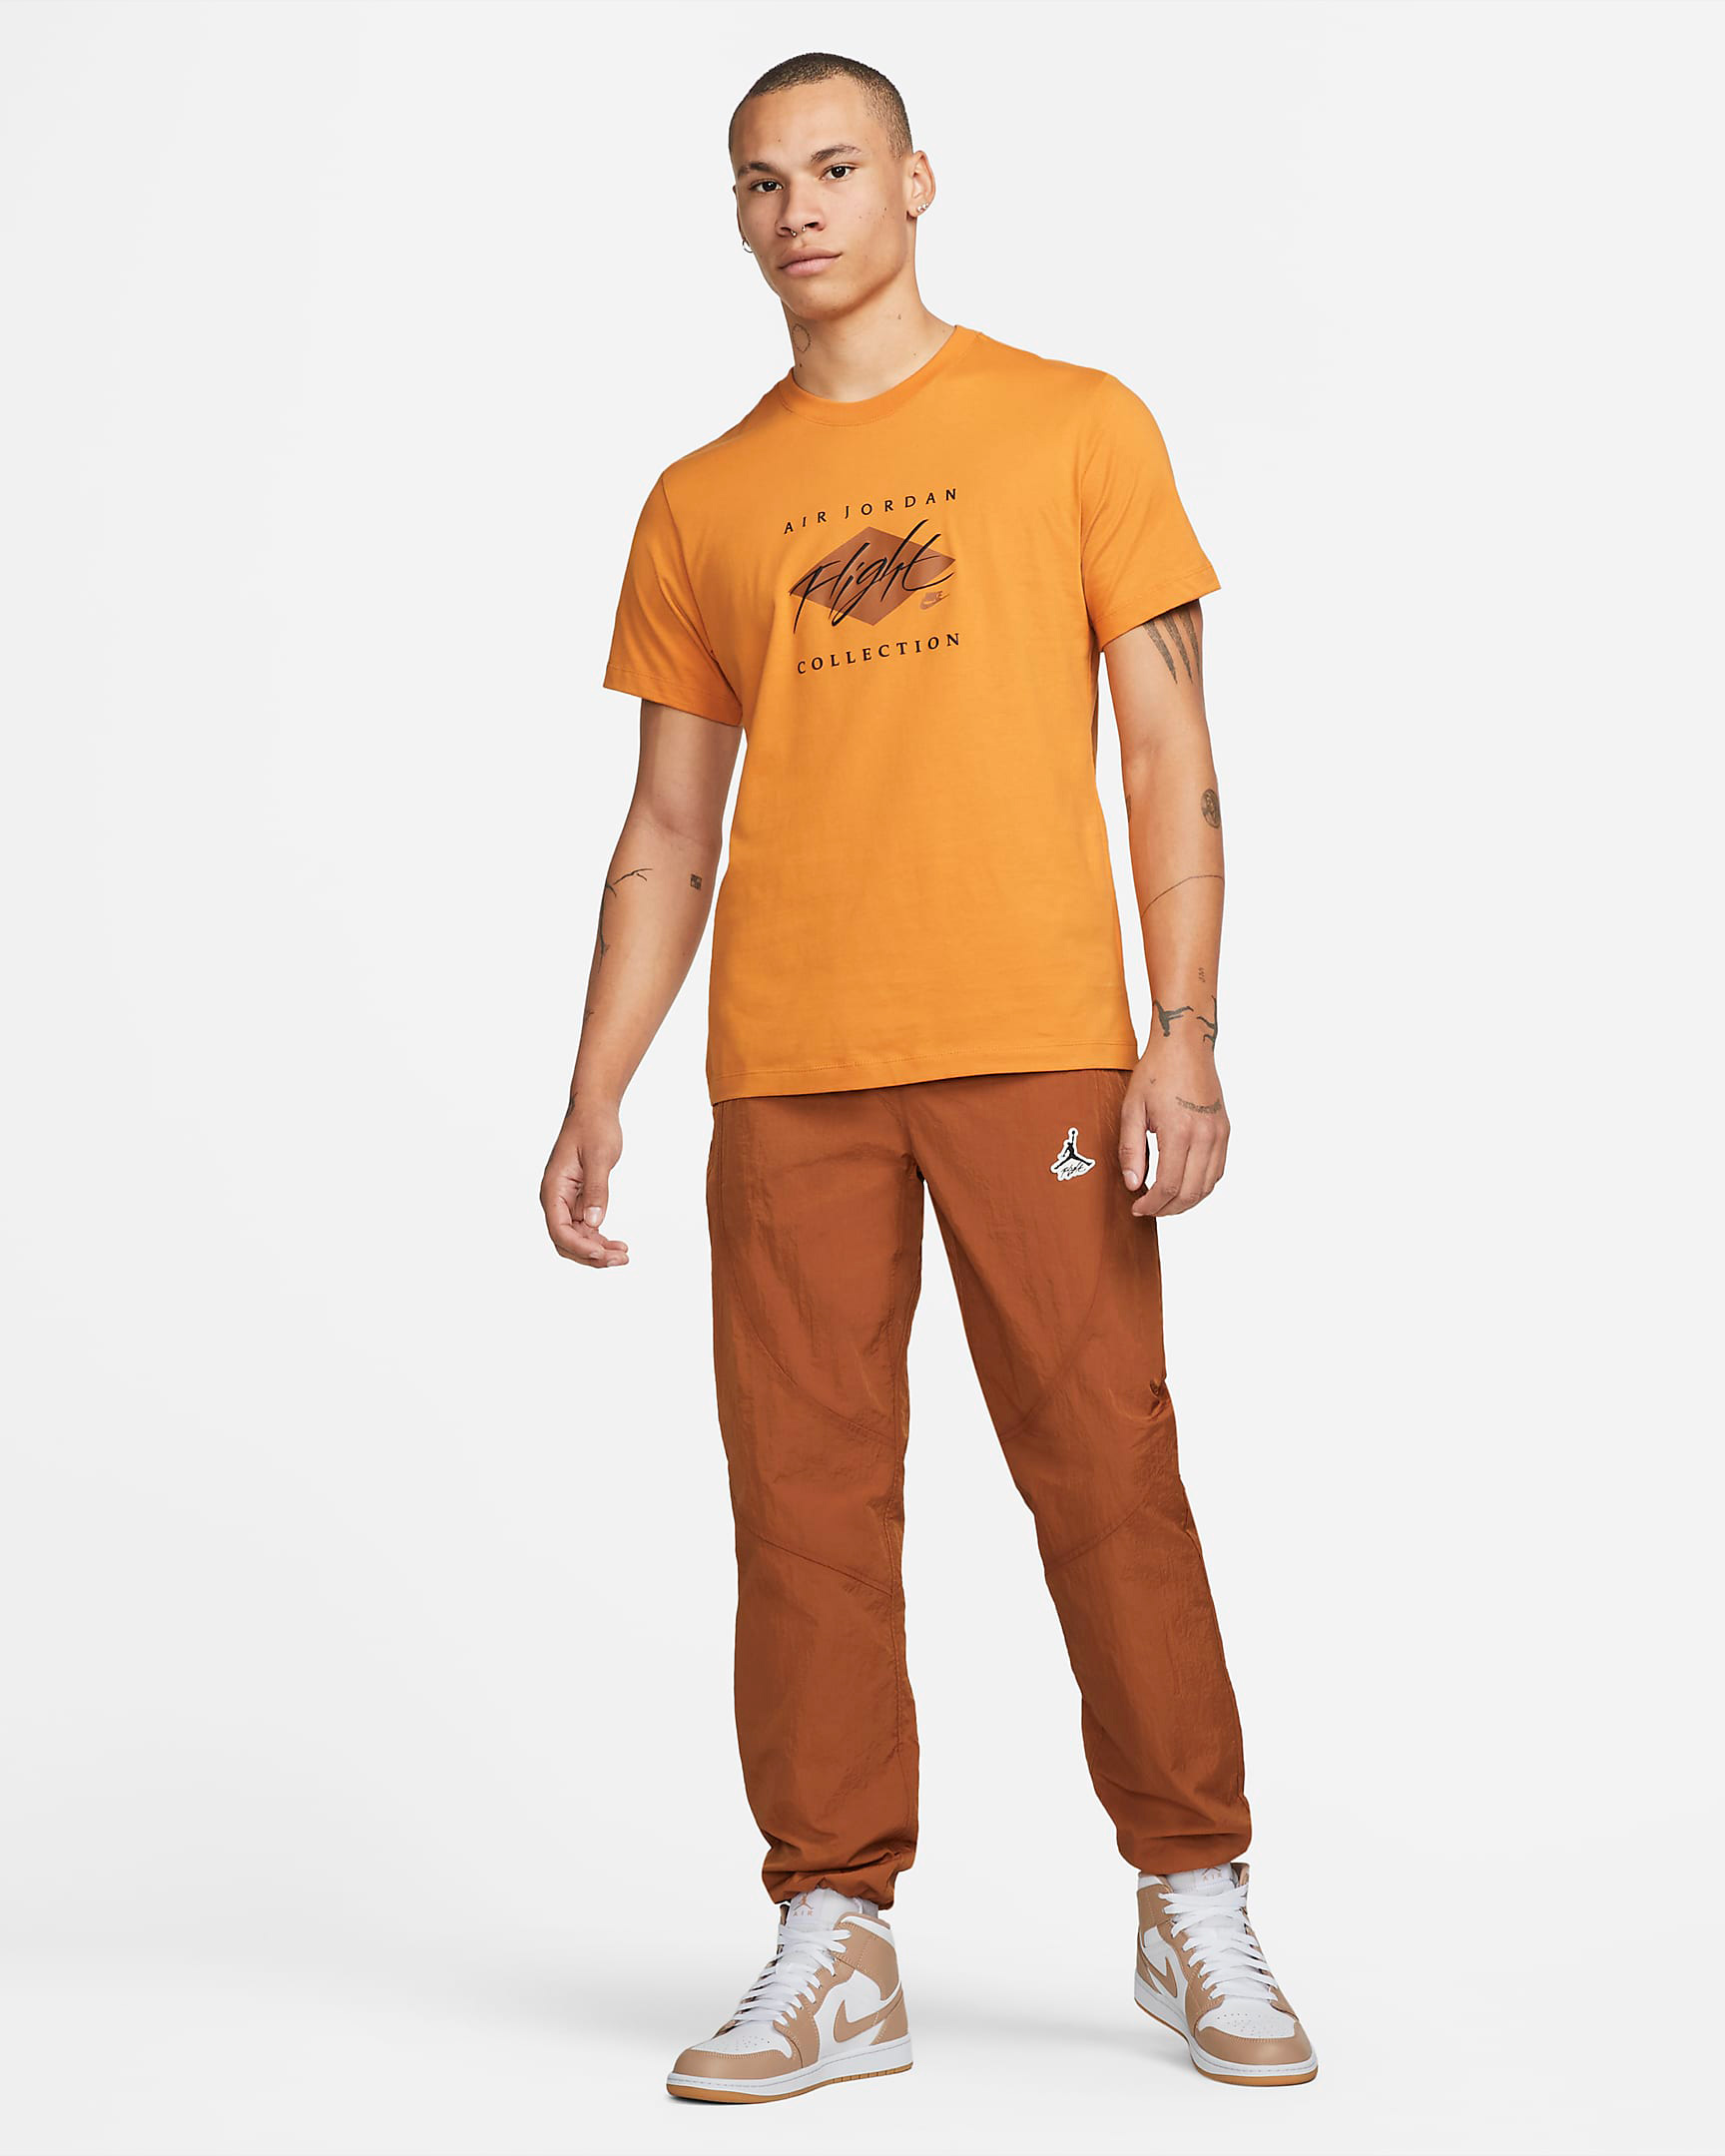 jordan-light-curry-sneaker-clothing-shirt-outfit